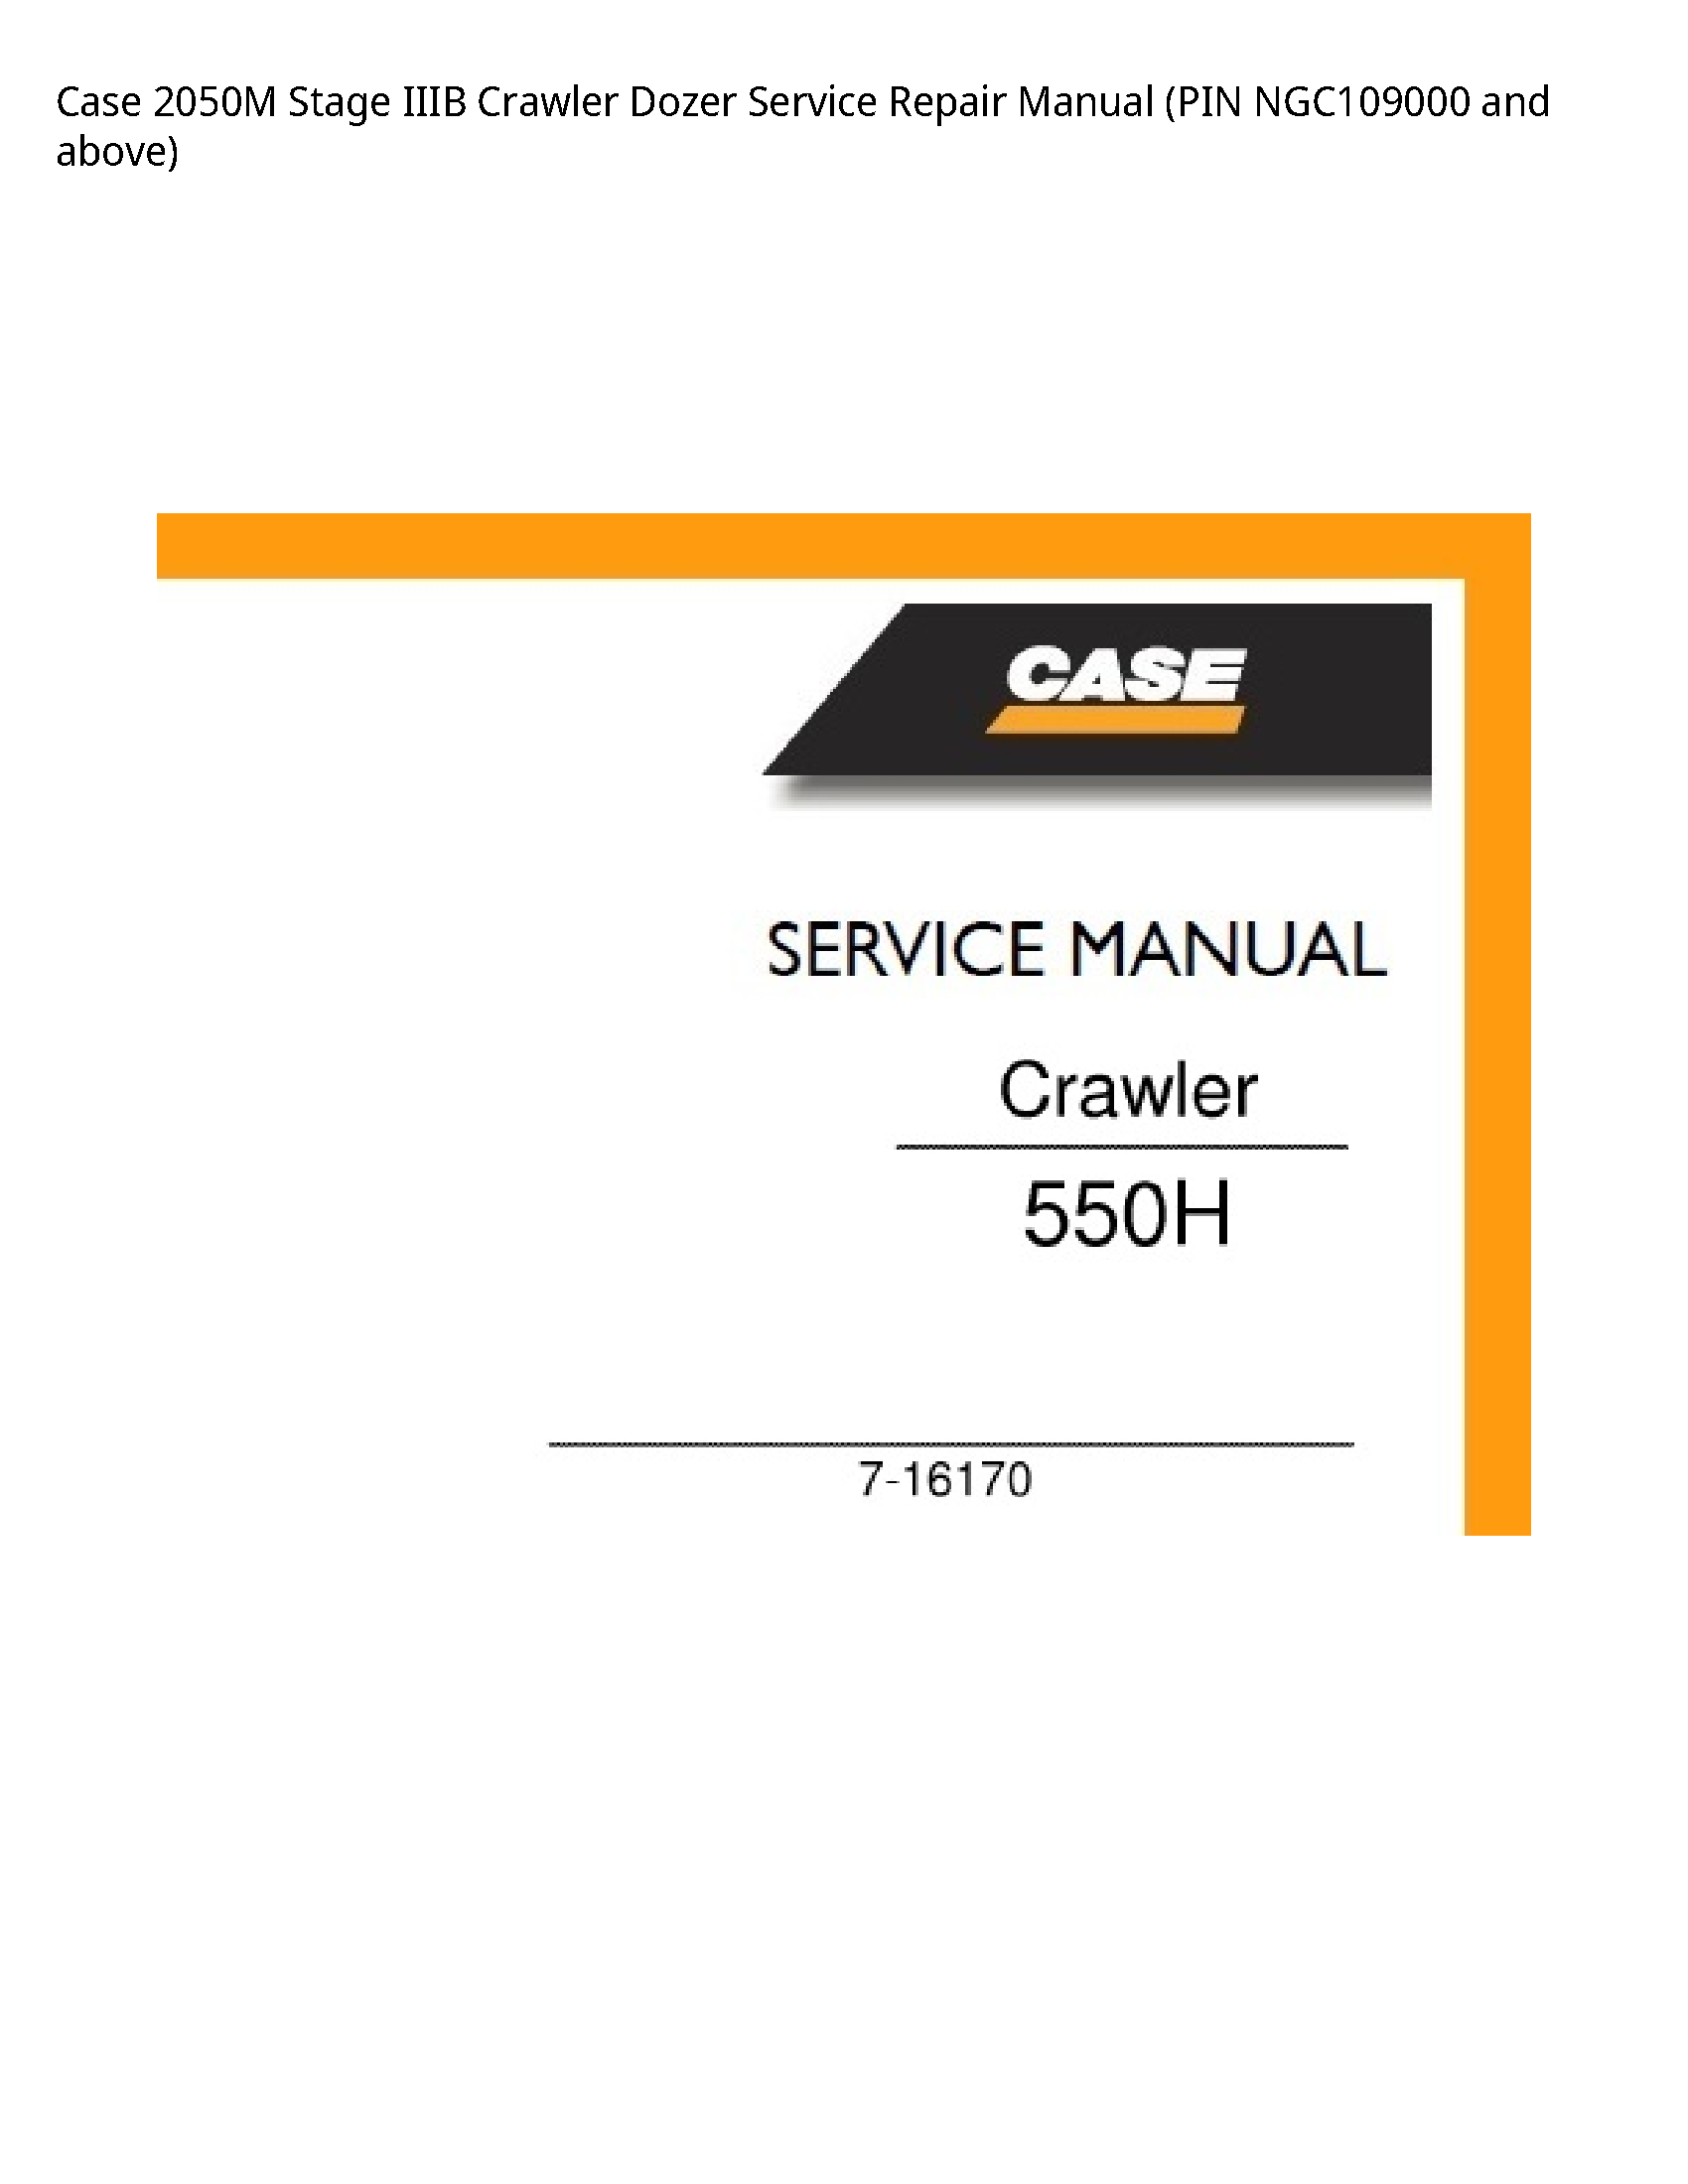 Case/Case IH 2050M Stage IIIB Crawler Dozer manual